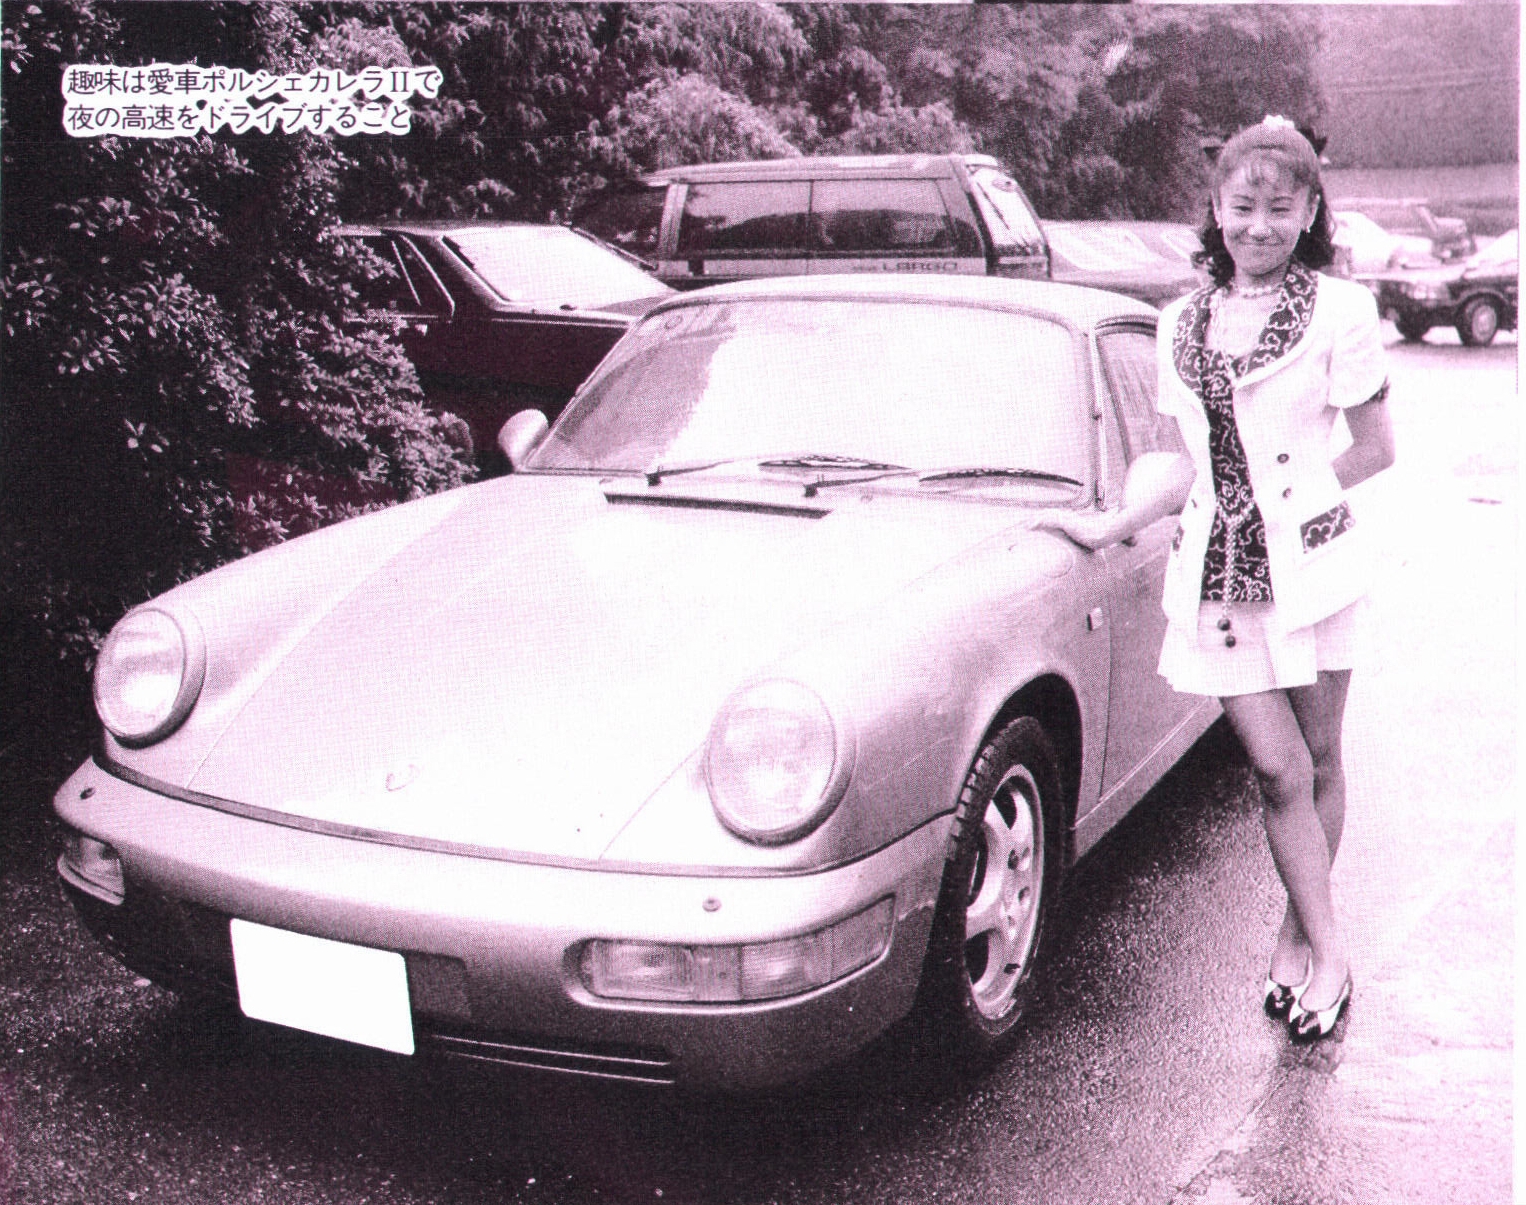 Naoko Takeuchi with her Porche Carrera II